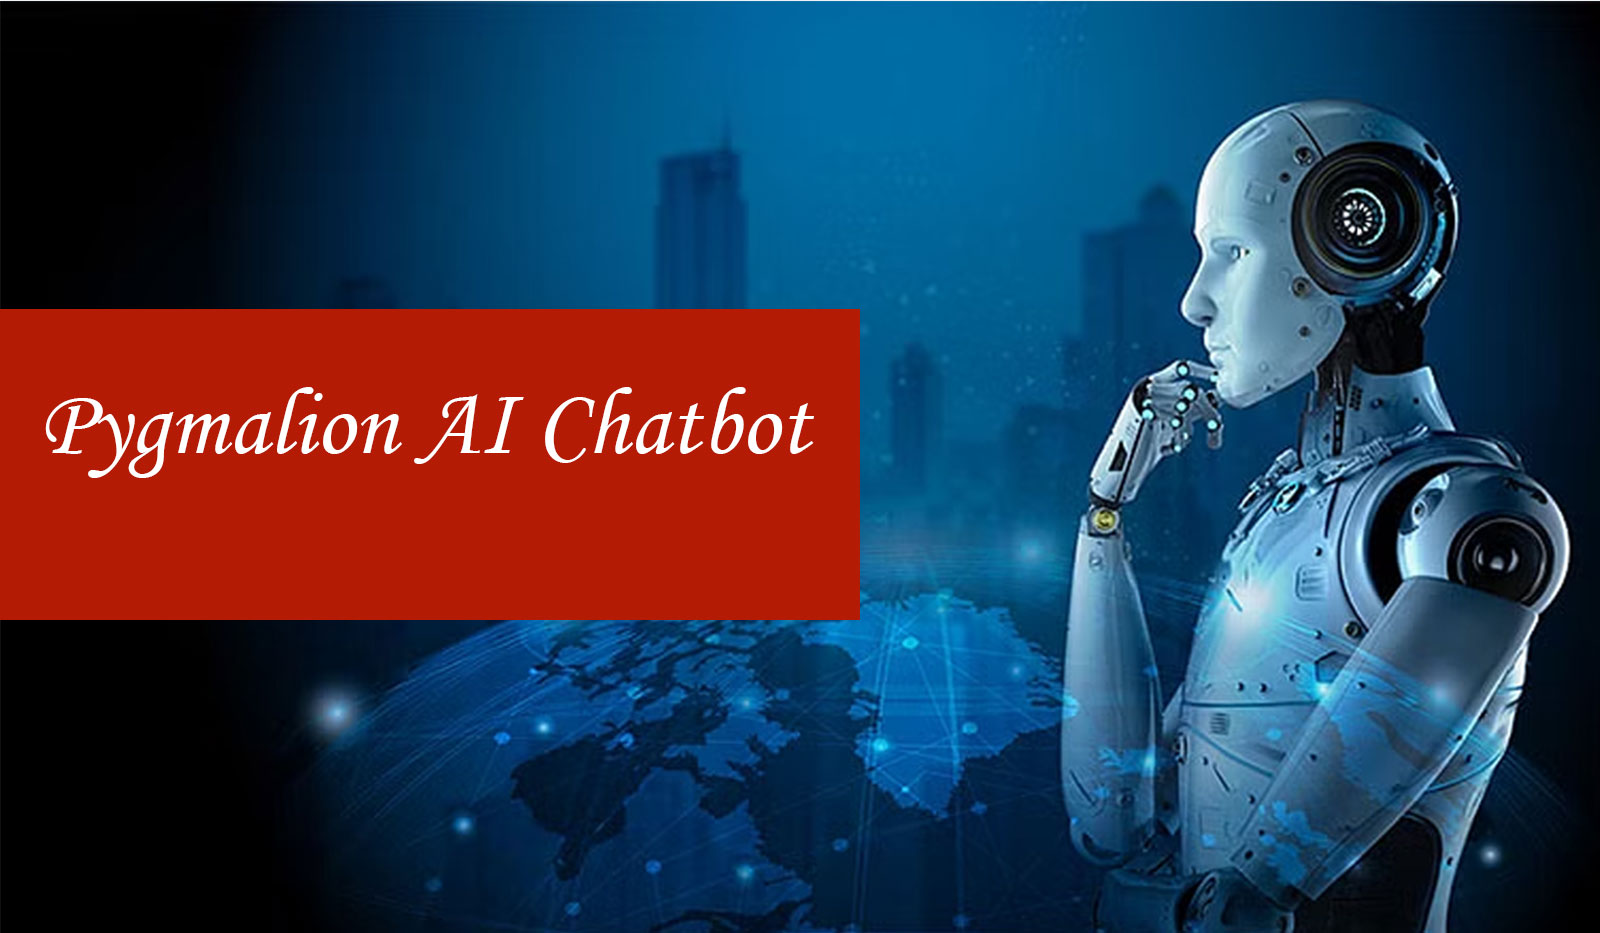 Pygmalion AI Chatbot